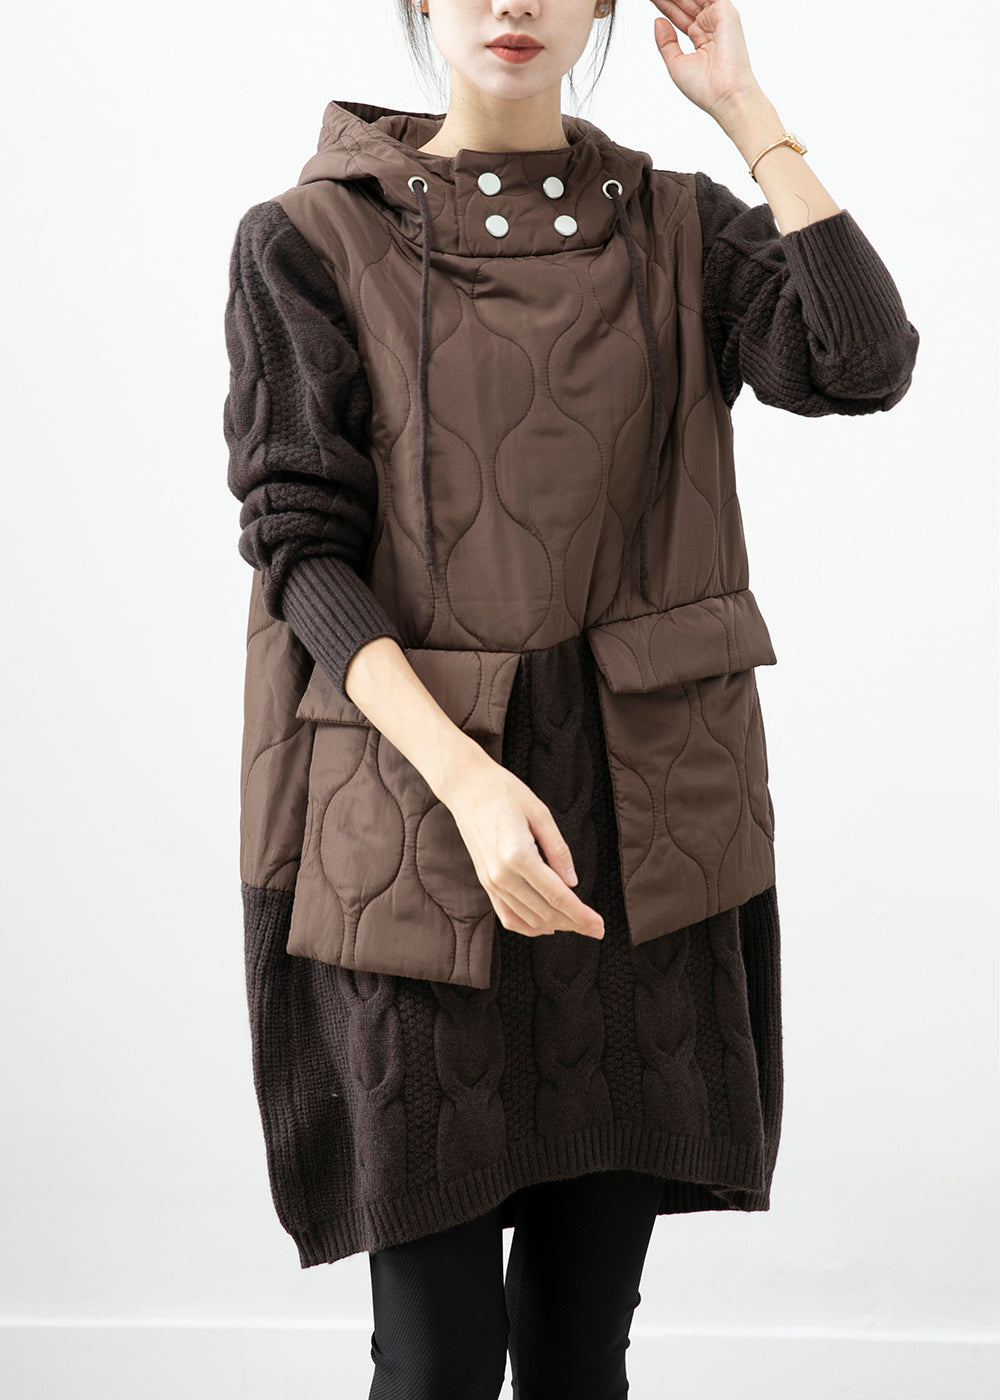 Chocolate Patchwork Knit Warm Fleece Pullover Sweatshirt Dress Hooded Pockets Winter